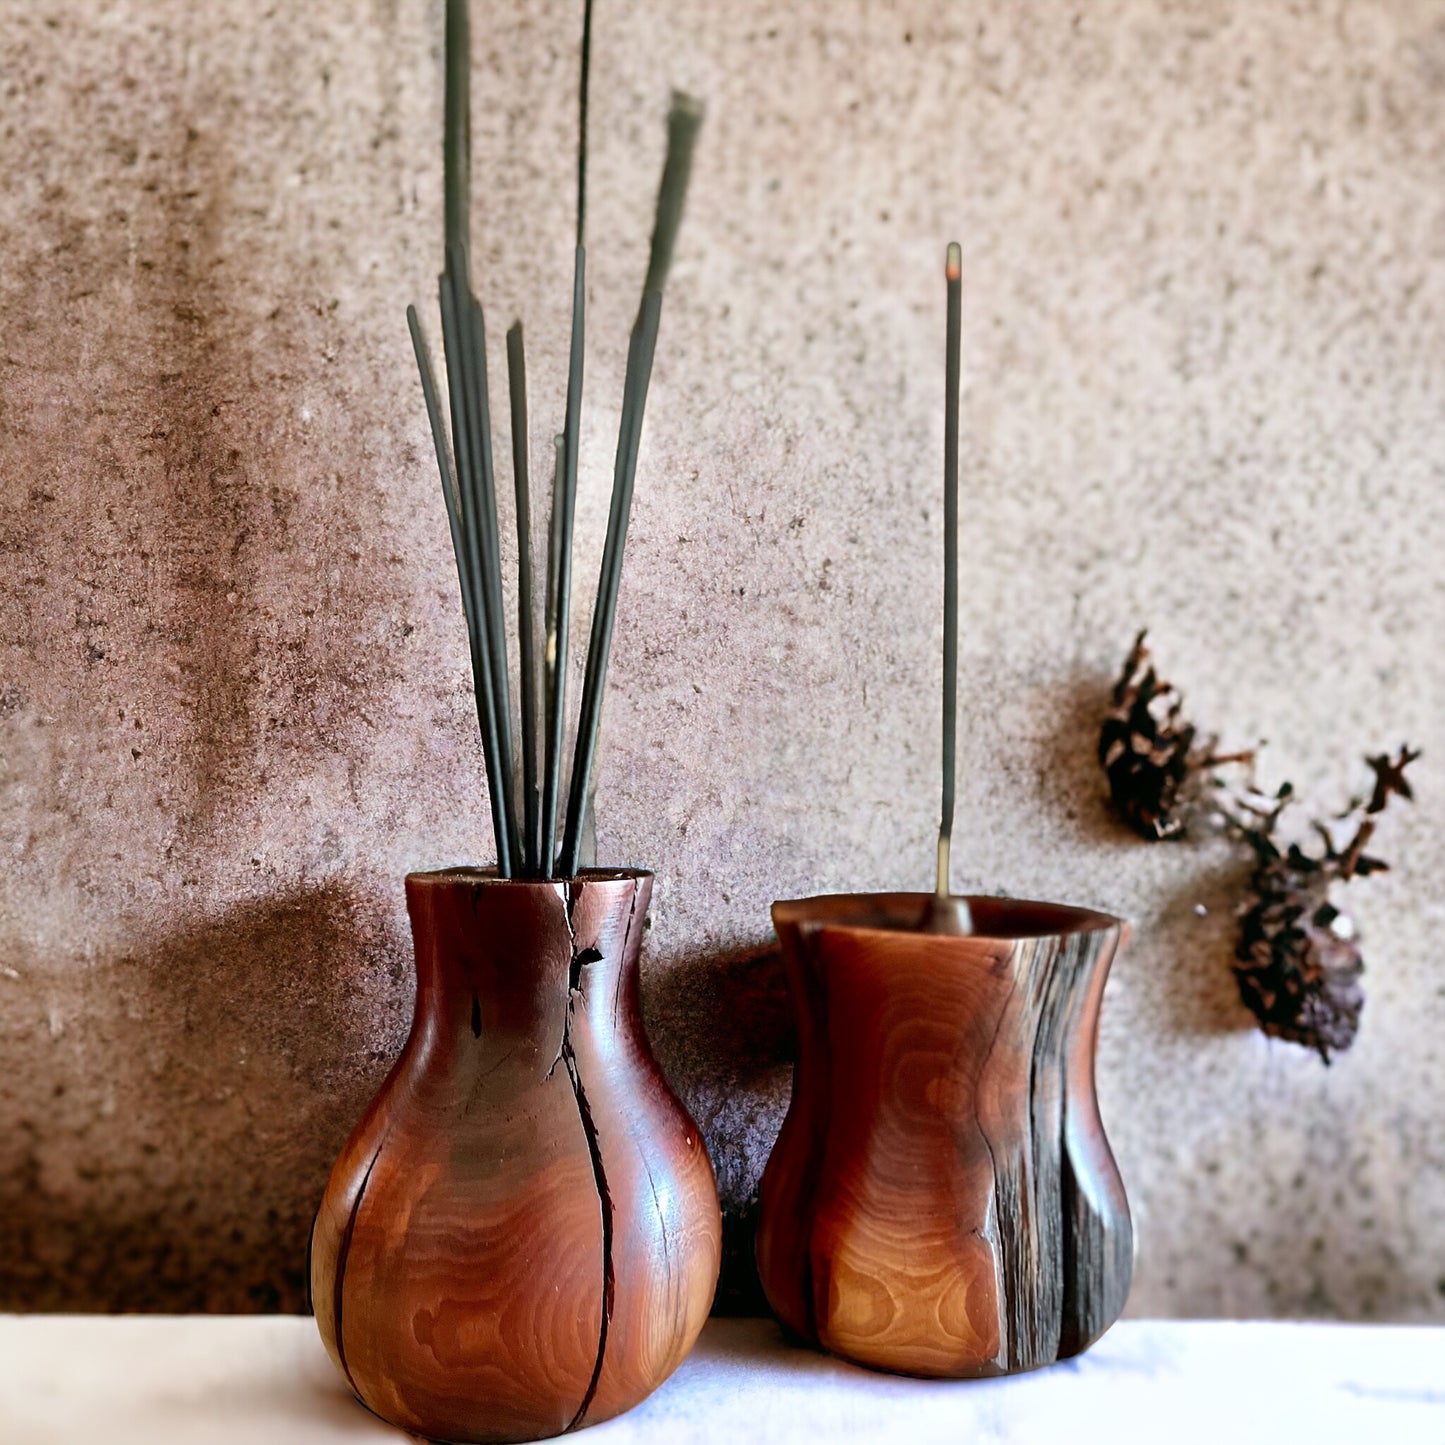 Handmade Incense Burner - Natural Wood Home Ornaments for a Serene Atmosphere.